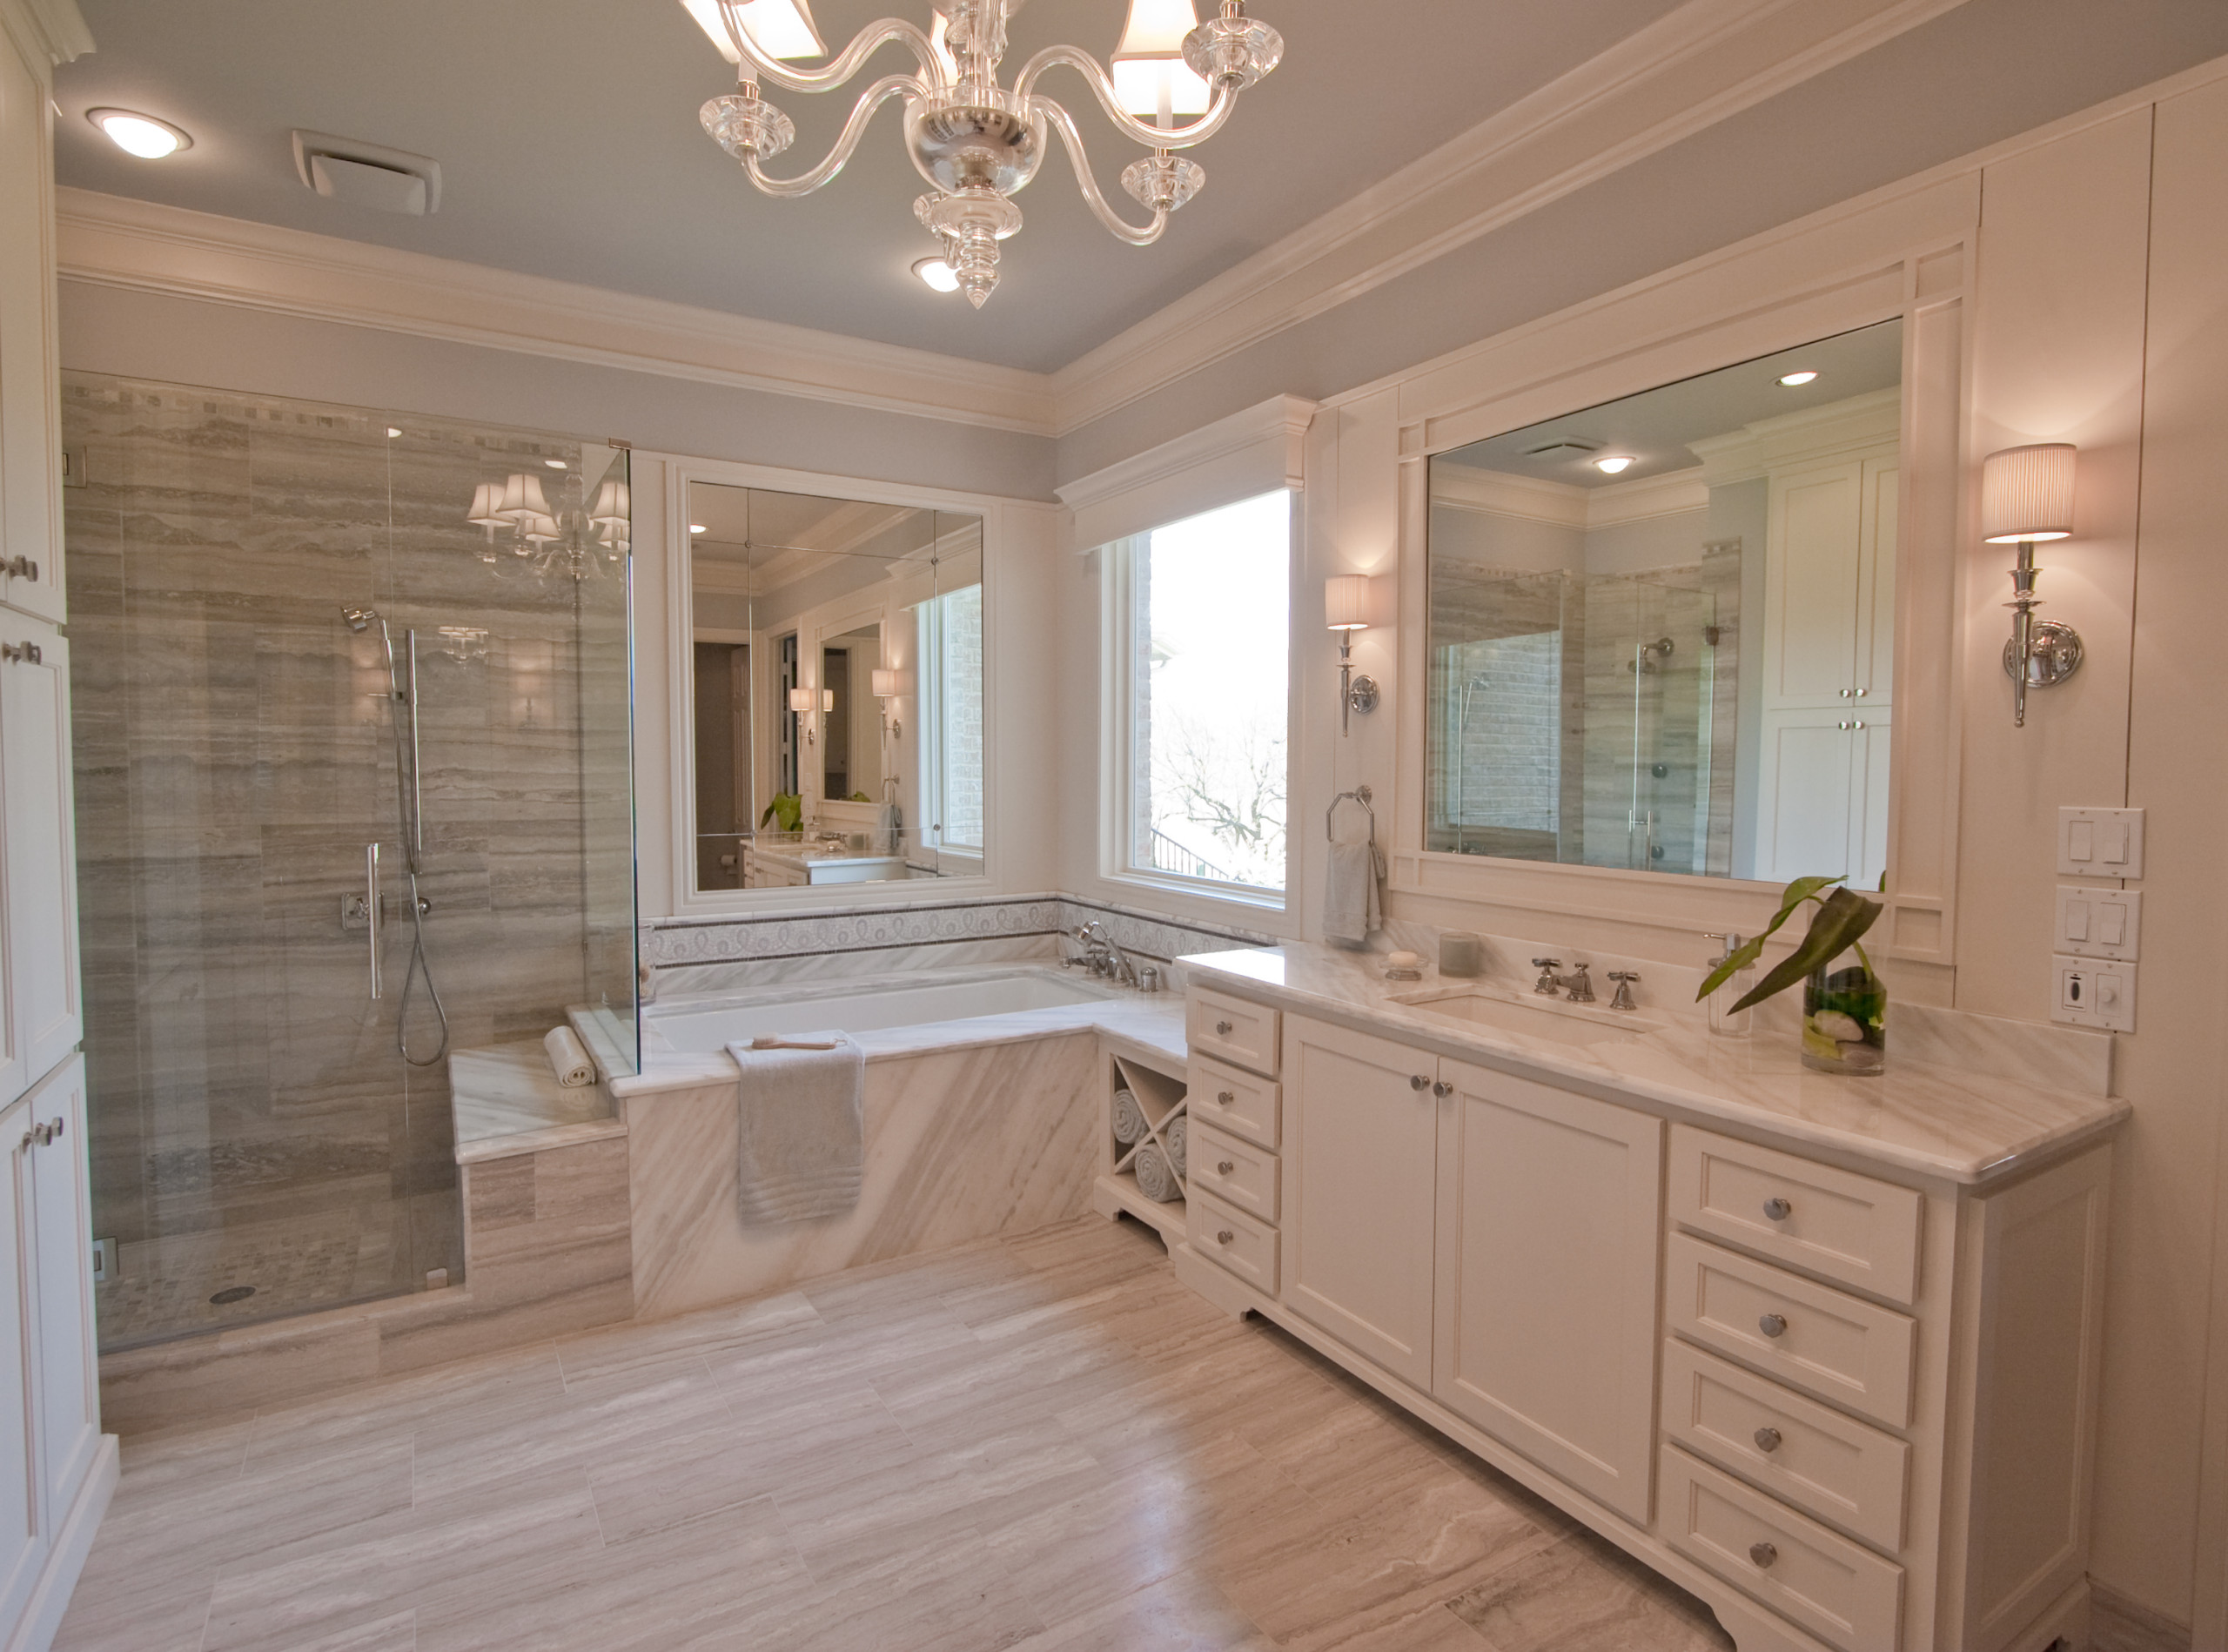 View of shower, tub & vanity